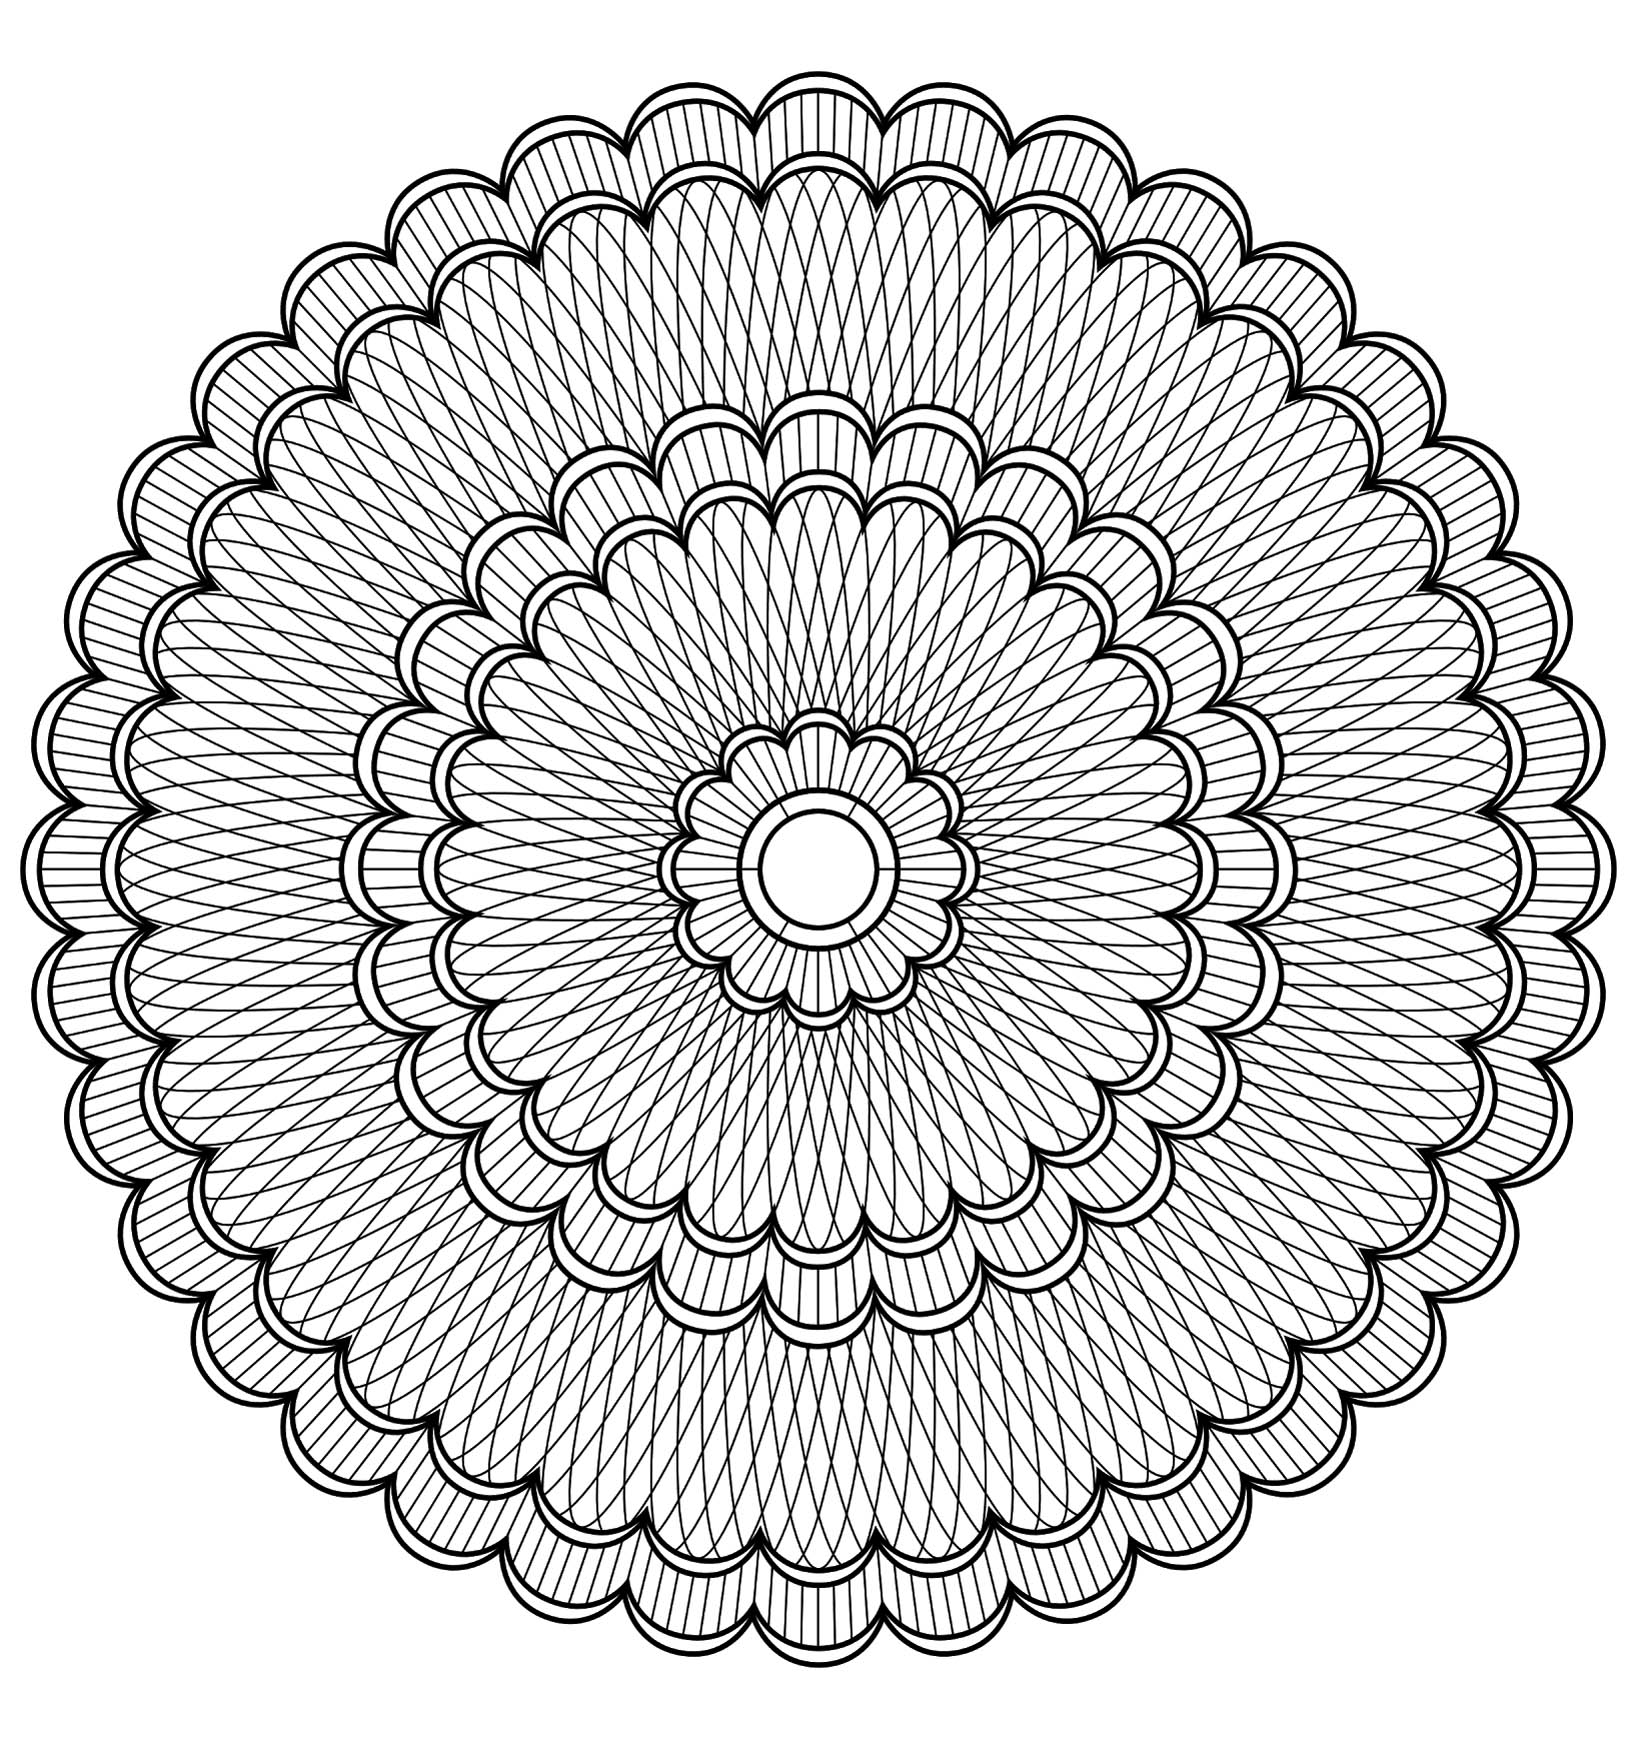 Mandala com padrões geométricos - 4